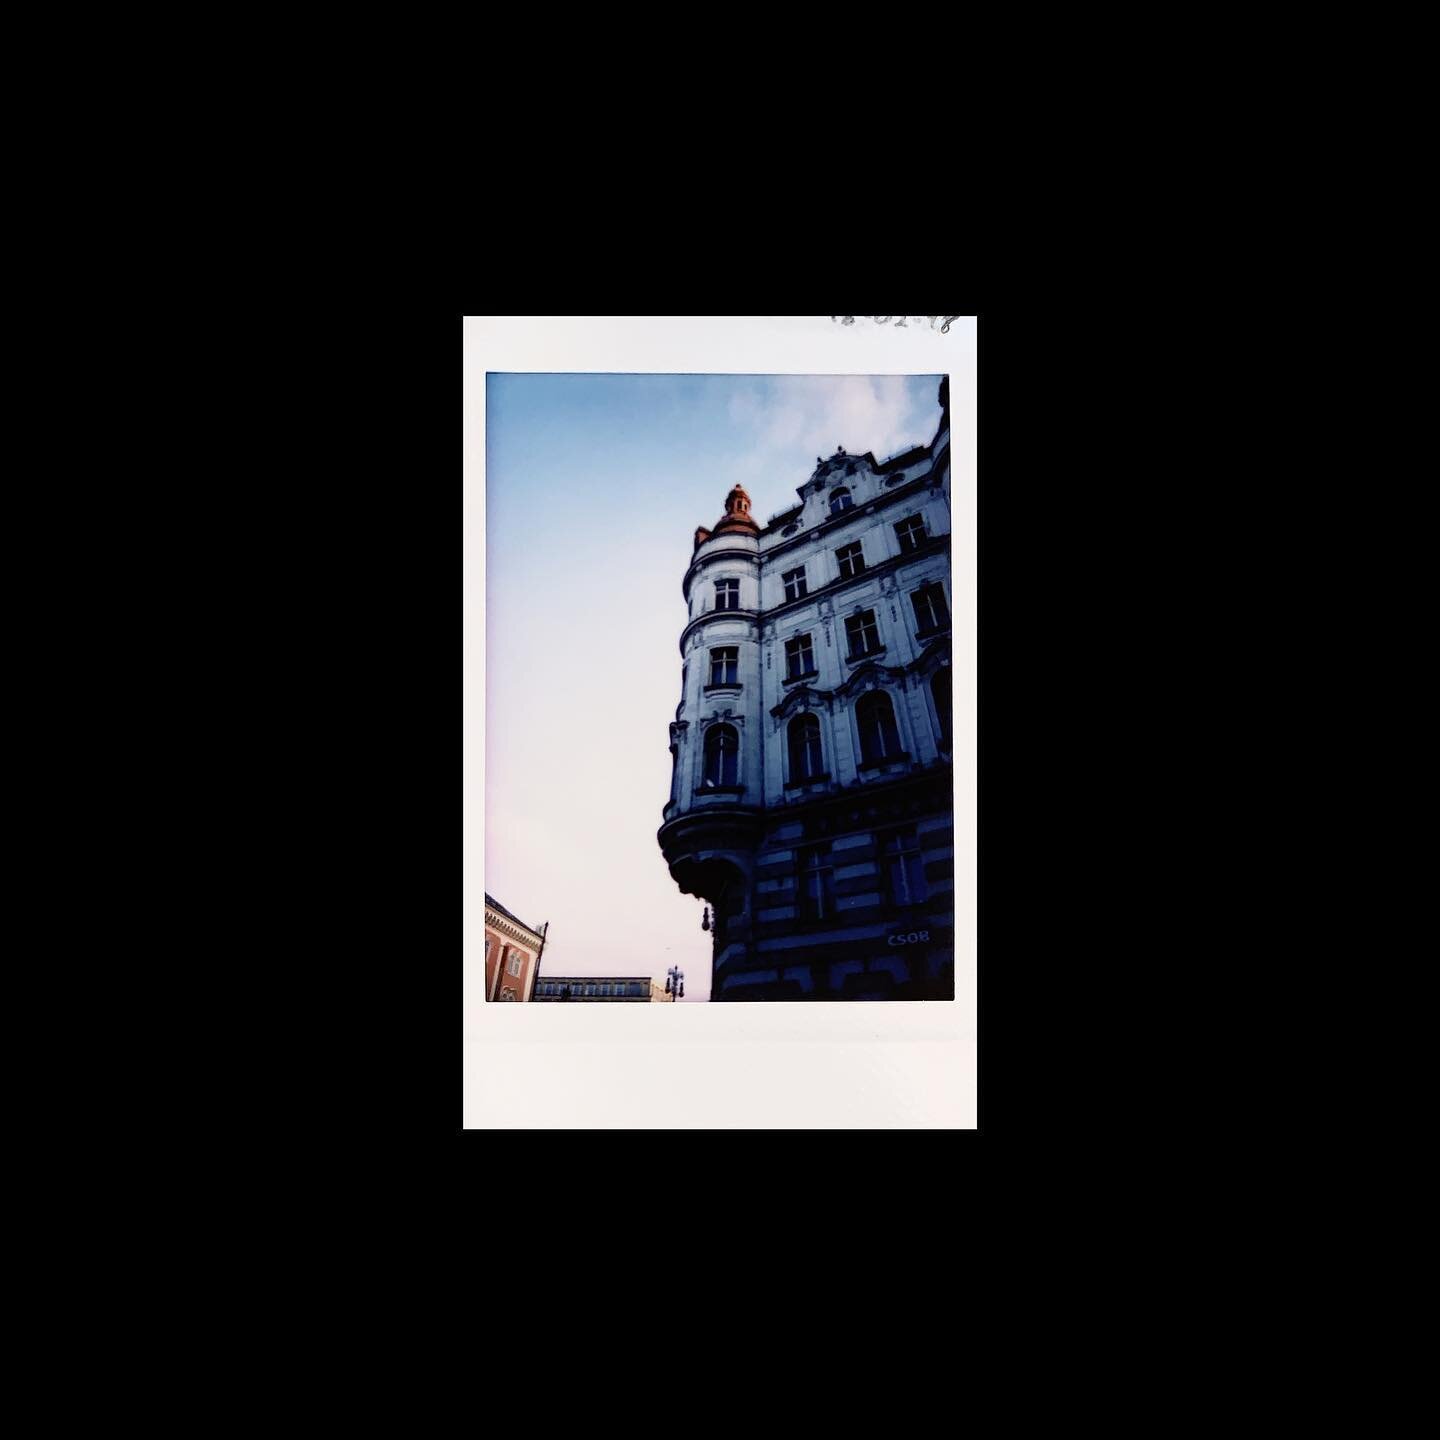 #prague #architecture #praha #bohemia #czech #urban #polaroid #polaroids #instantphoto #photography #fujifilm #instax #photo #photos #pic #pics #picture #pictures #snapshot #art #picoftheday #photooftheday #exposure #travel #traveling #vacation #visi